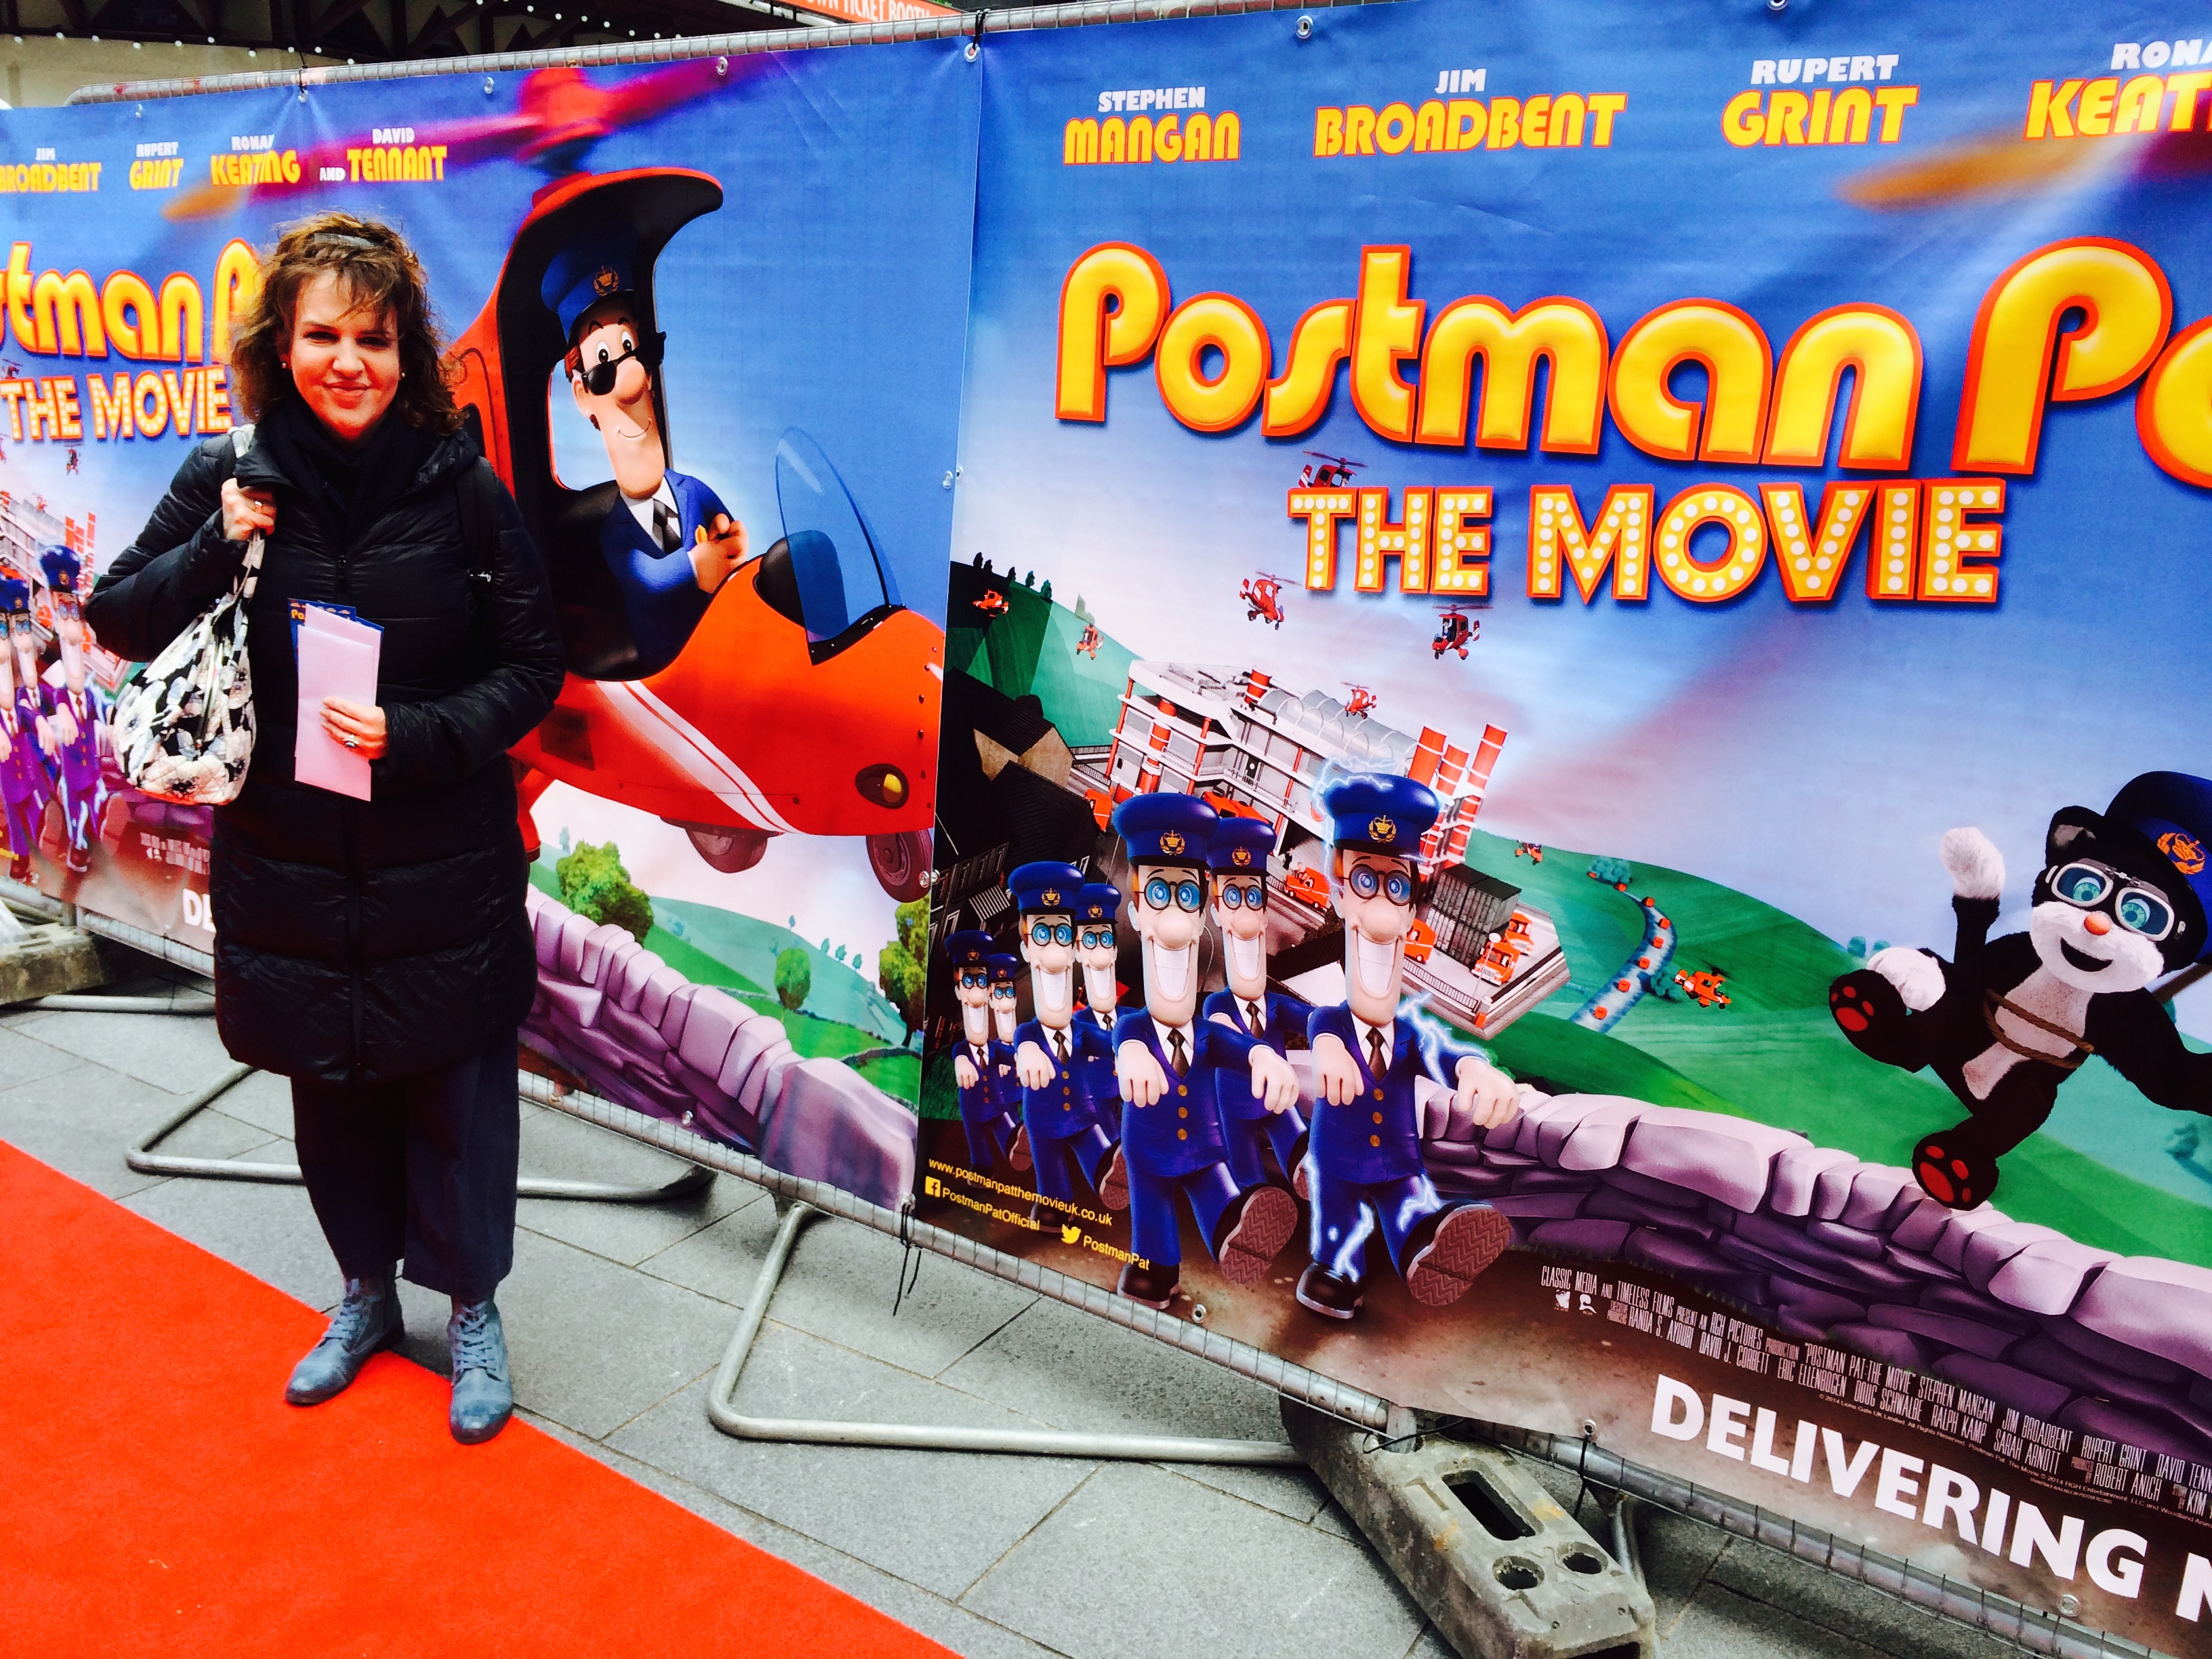 Postman Pat: the Movie world premiere in London on Sunday, May 11; Marlene Sharp, Director of Development, RGH Entertainment